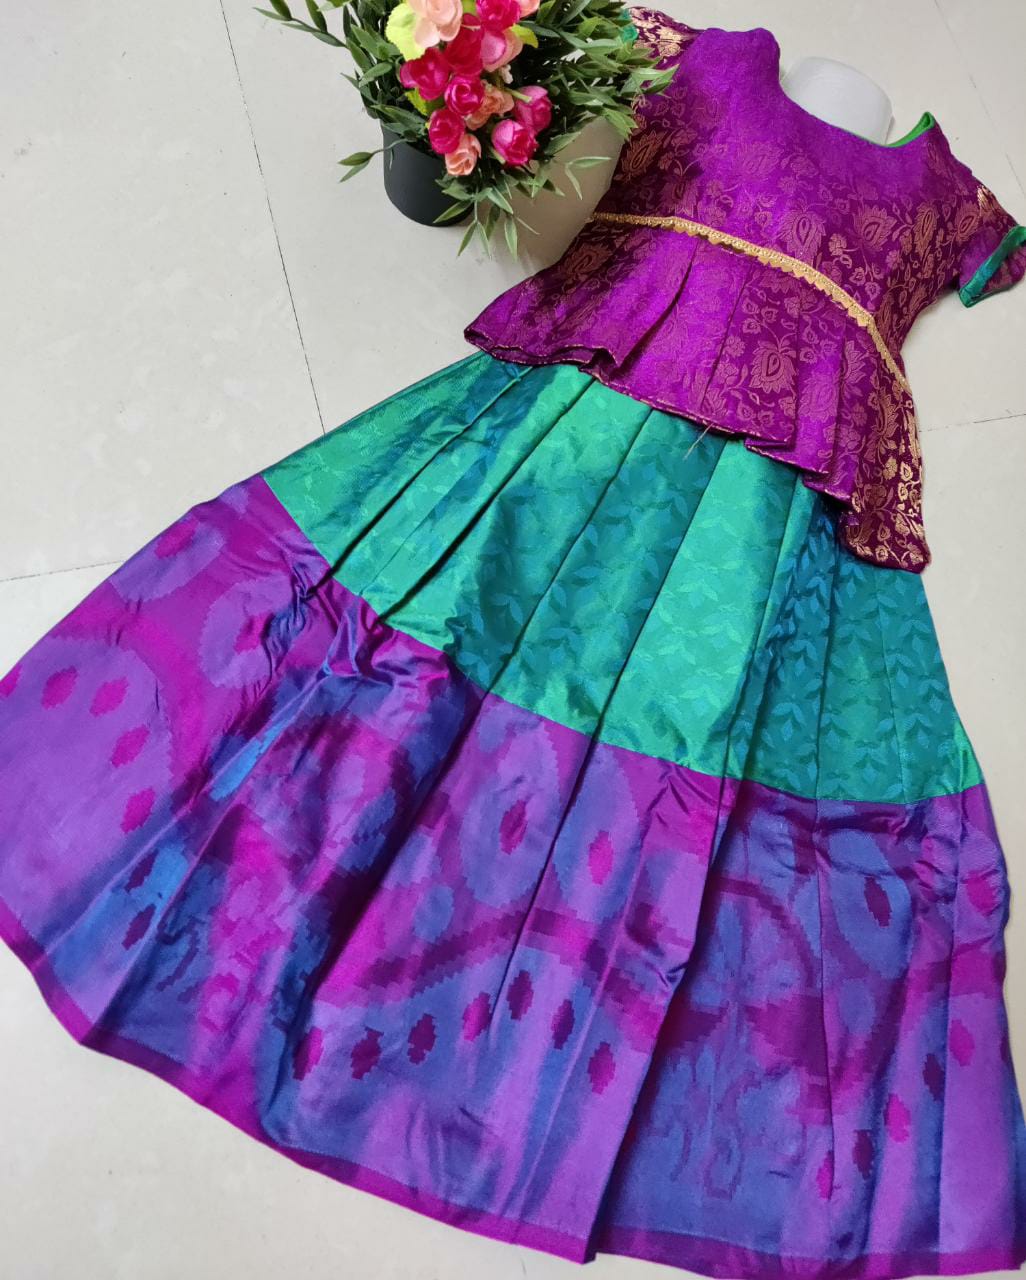 Buy DEVIDINO Beautiful and Stylish Viscose Rayon Ethnic Top Skirt Set Black  at Amazon.in